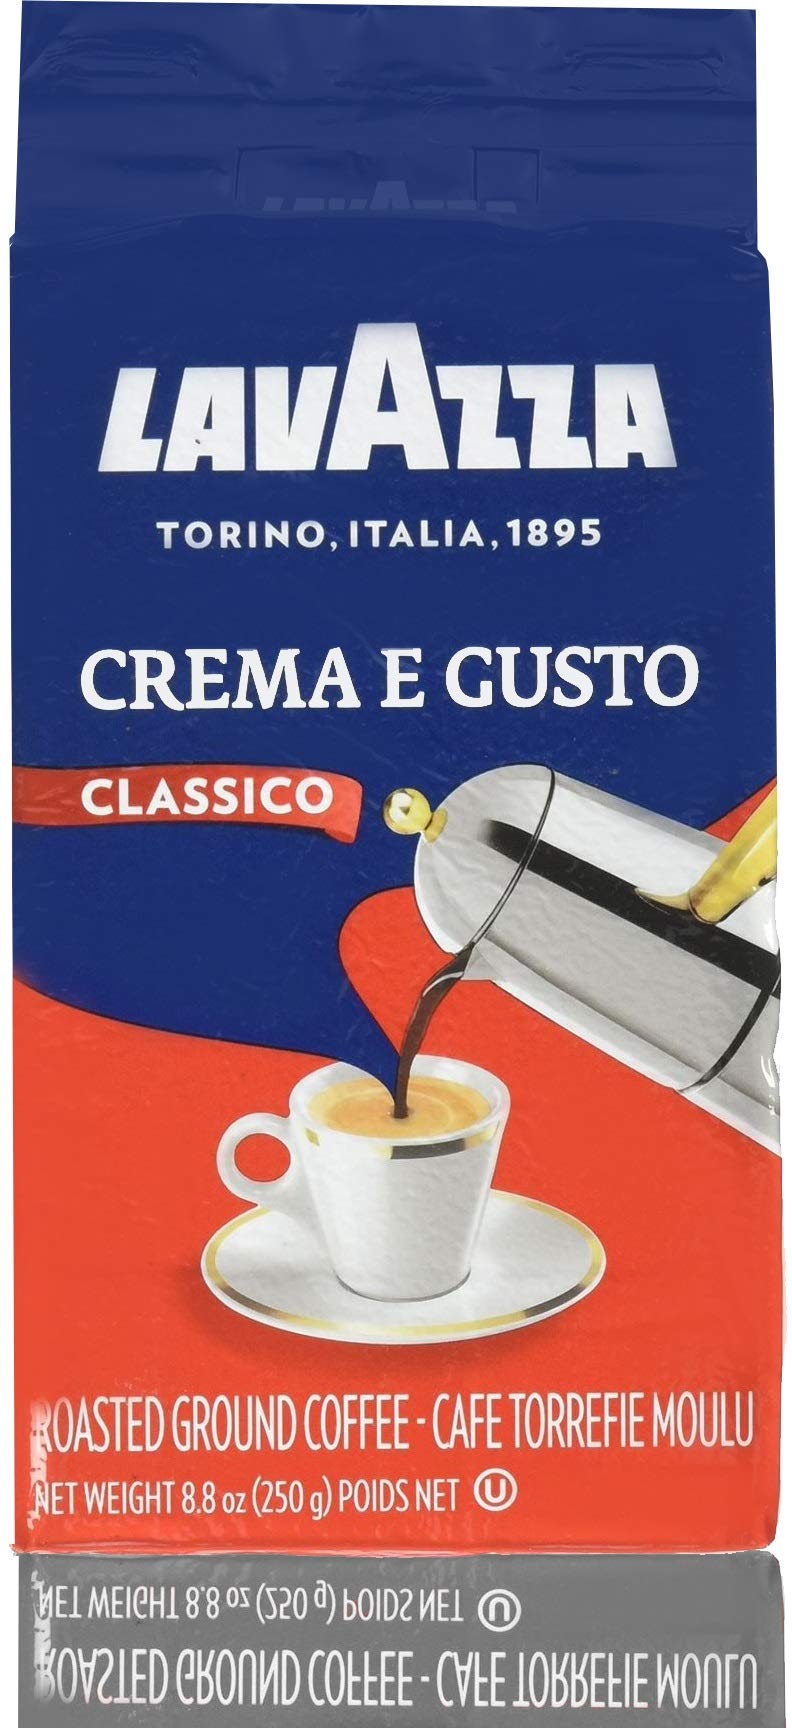 Lavazza Crema e Gusto Classico Roasted Ground Coffee 8.8 Ounce Bag